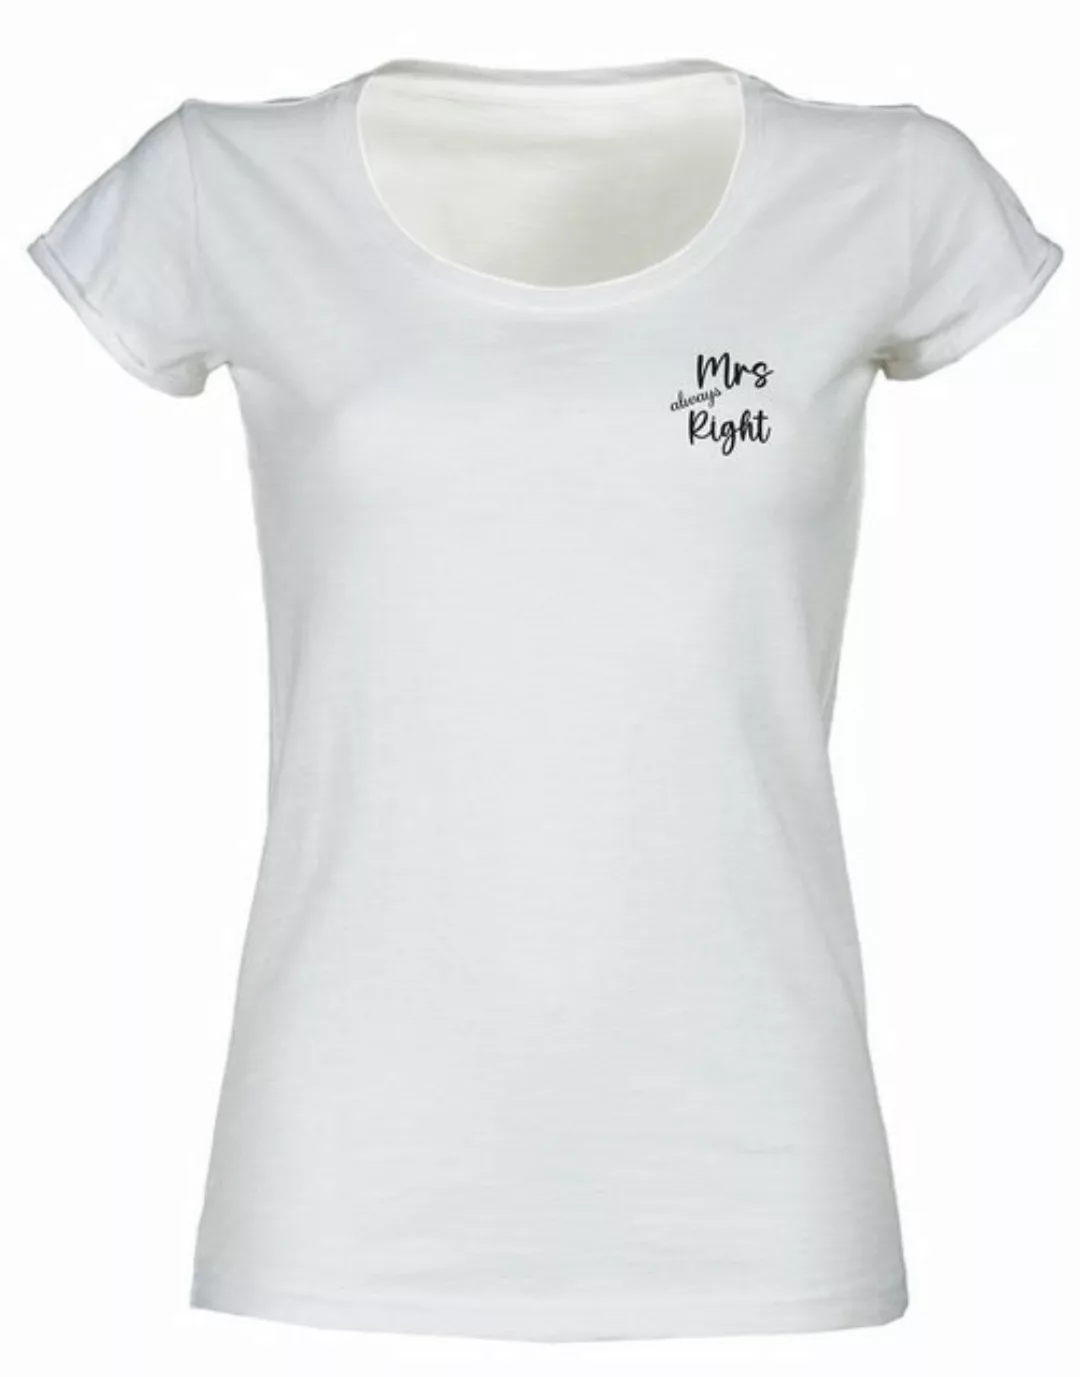 Baddery Print-Shirt Damen T-Shirt: "Mrs. always Right" - Funshirts für Frau günstig online kaufen